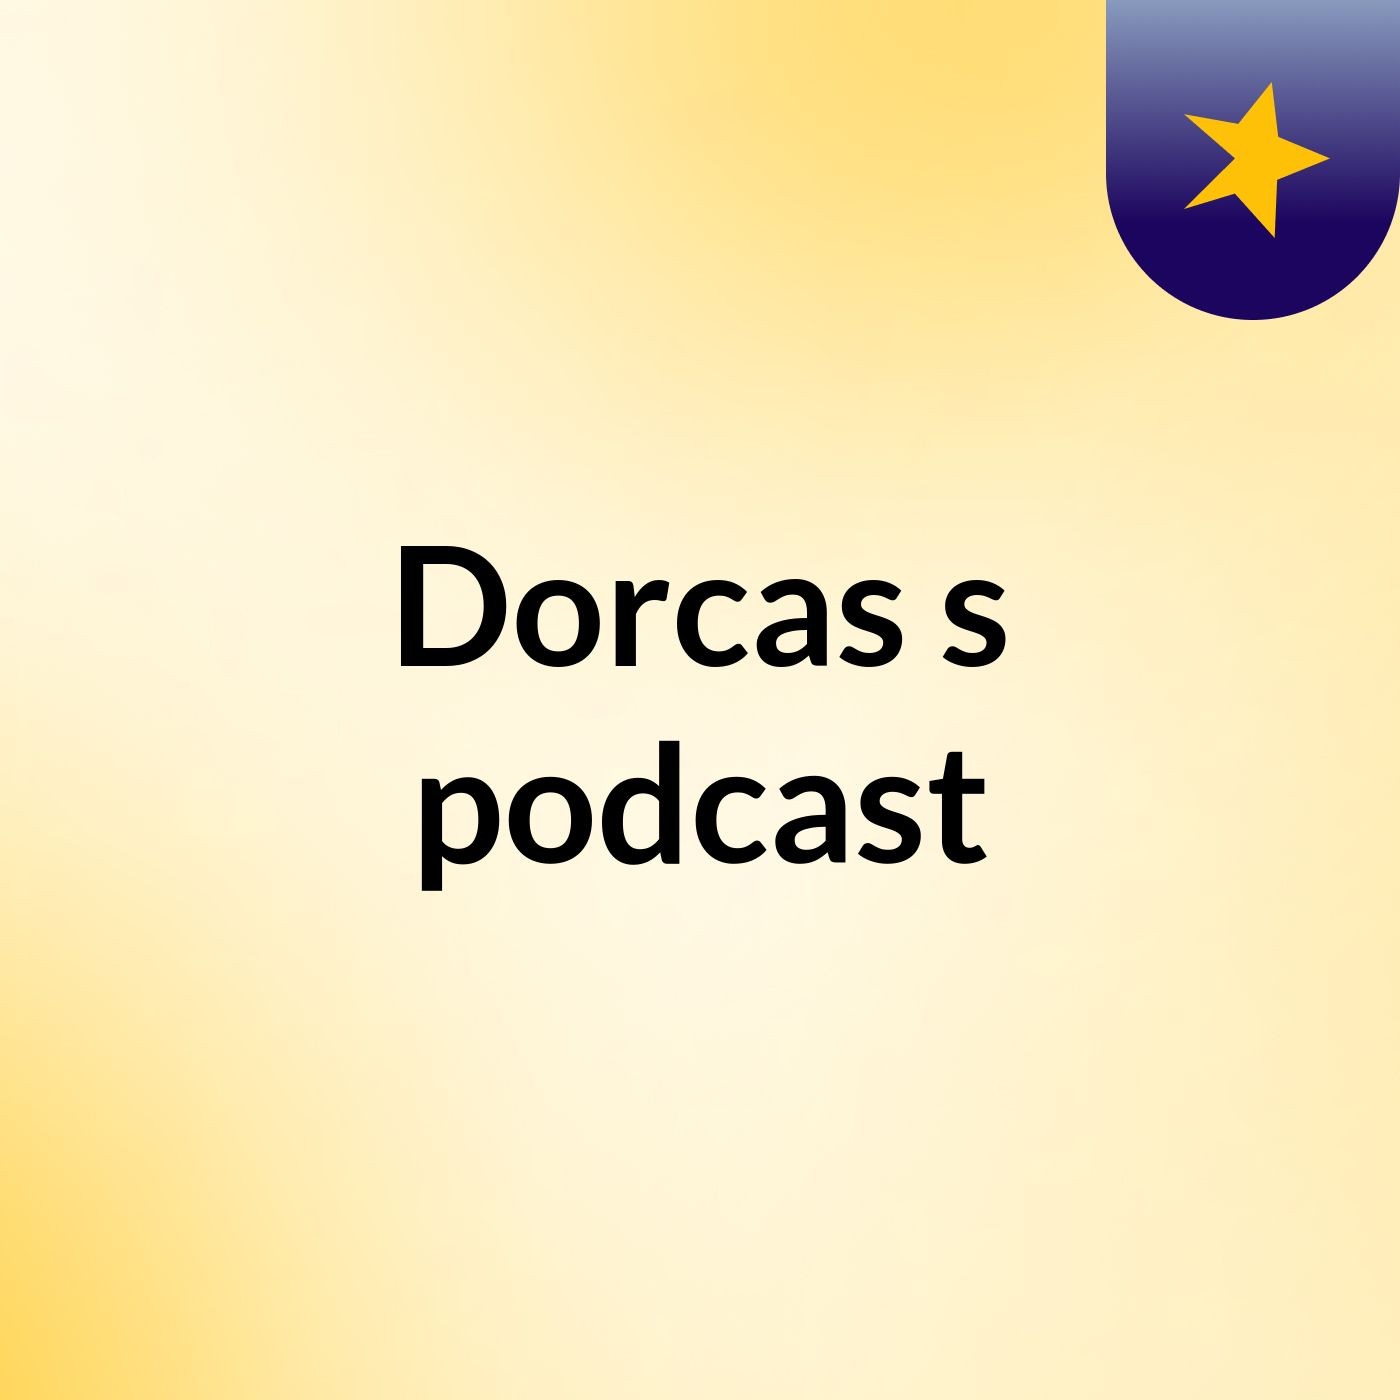 Dorcas's podcast